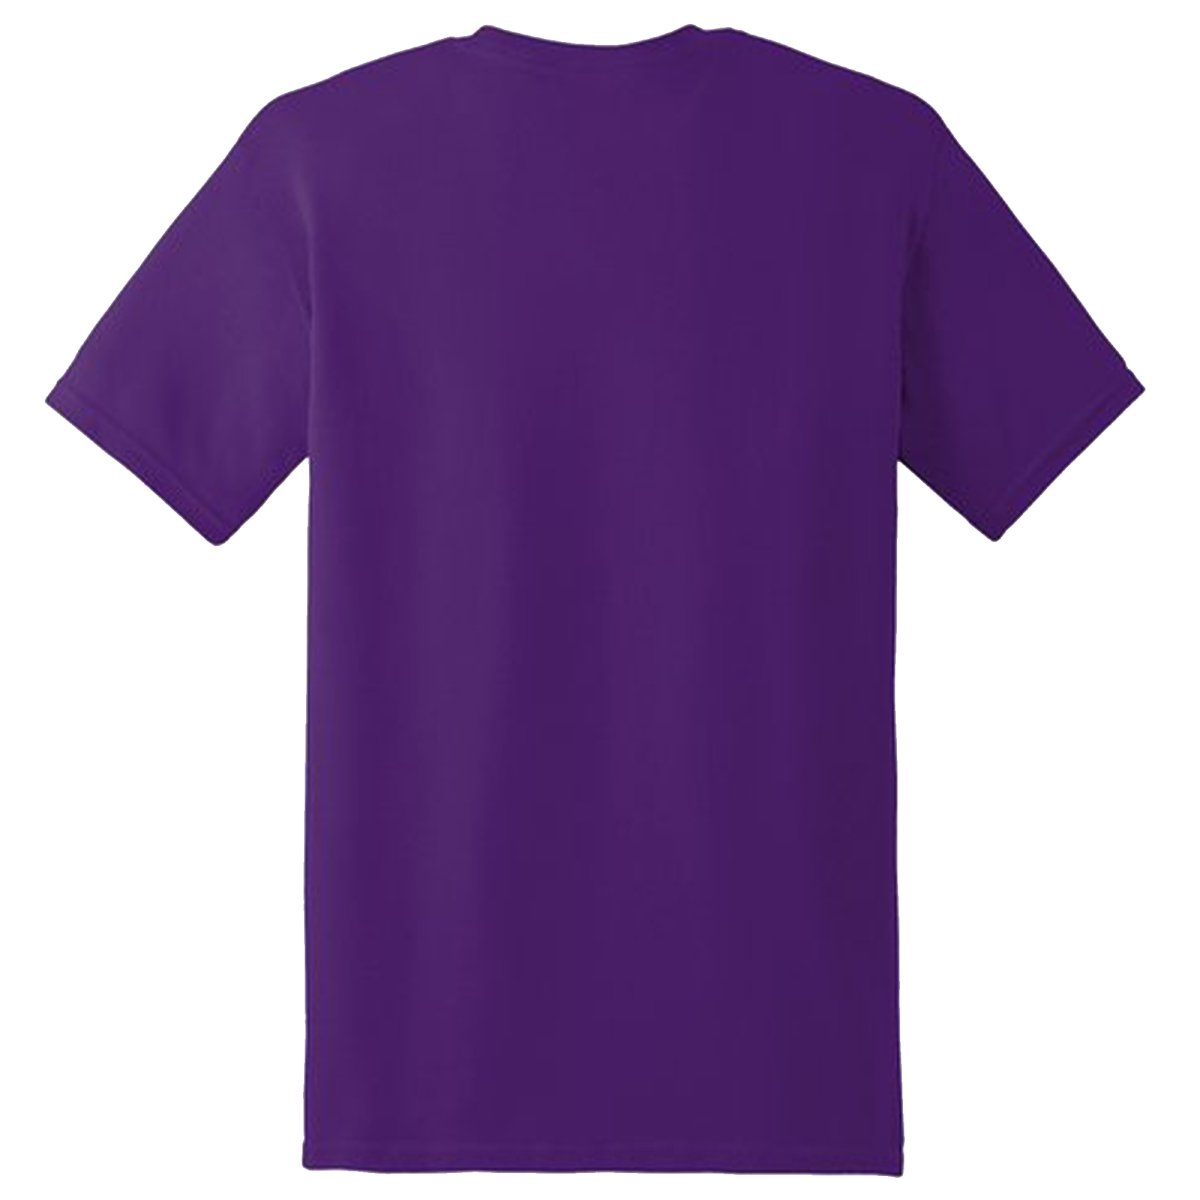 Men's Mardi Gras New Orleans Purple Tee-Shirt - Mardi Gras Apparel, Mardi Gras Purple Tee-Shirt, New Orleans Celebration Shirt, Festive Unisex Apparel, Comfortable Mardi Gras Clothing 